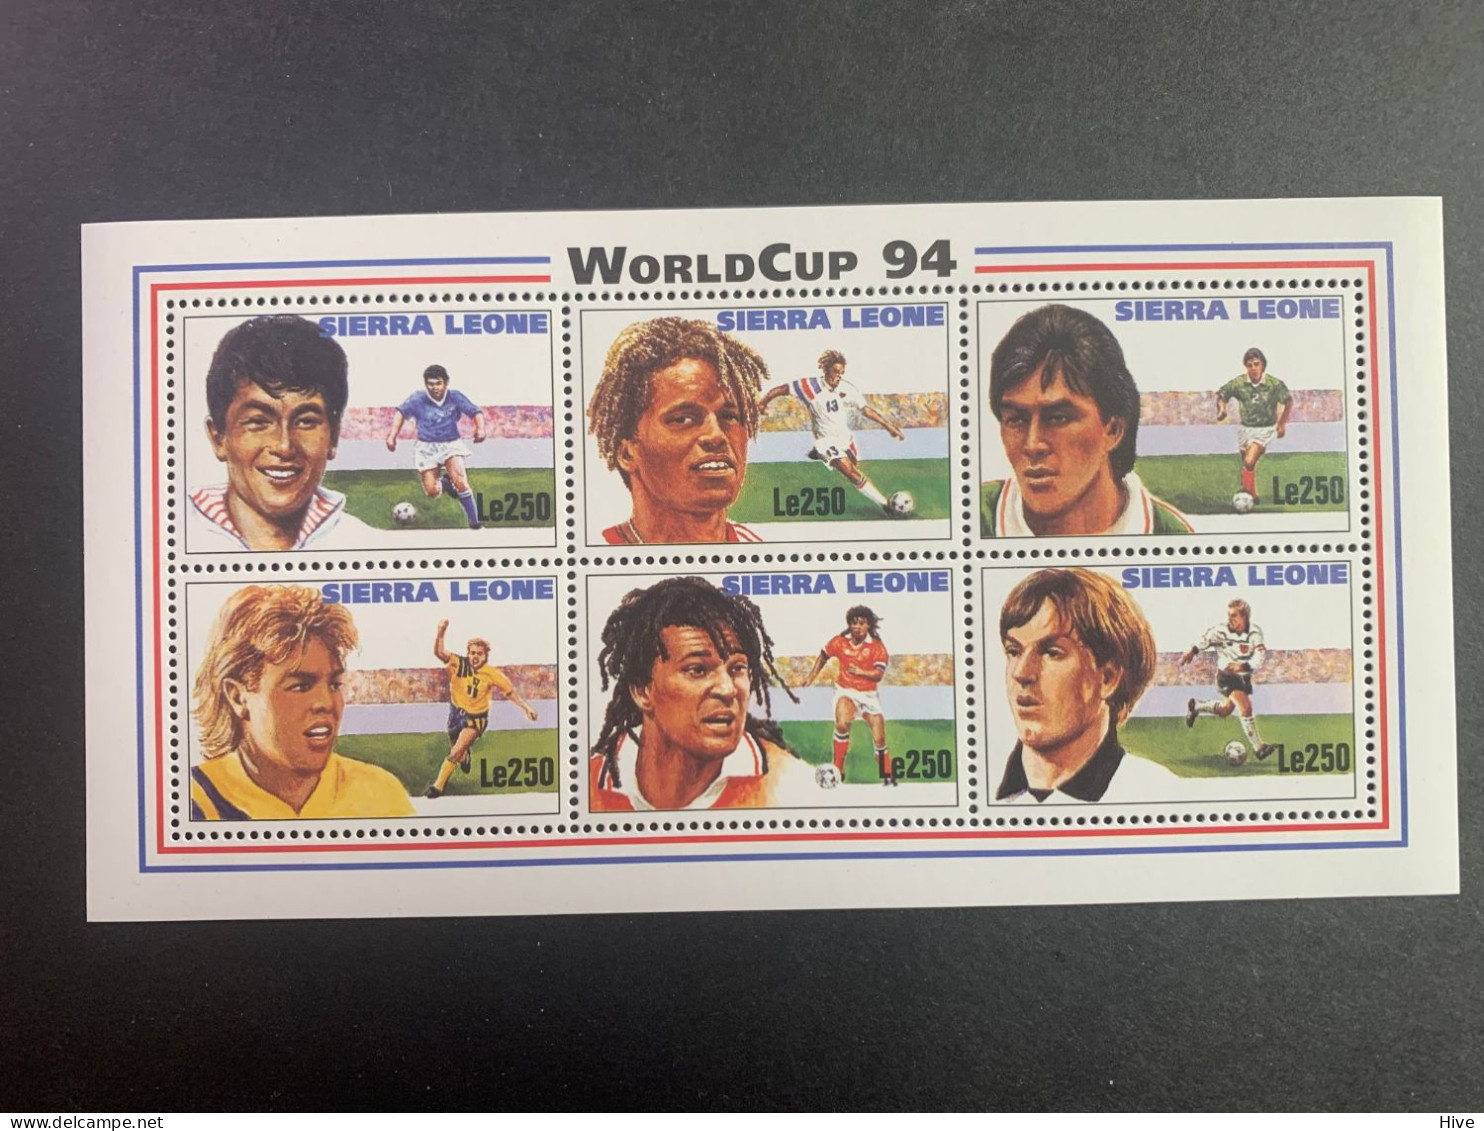 SIERRA LEONE 1994 SPORT FOOTBALL SOCCER WORLD CUP MNH - Sierra Leona (1961-...)